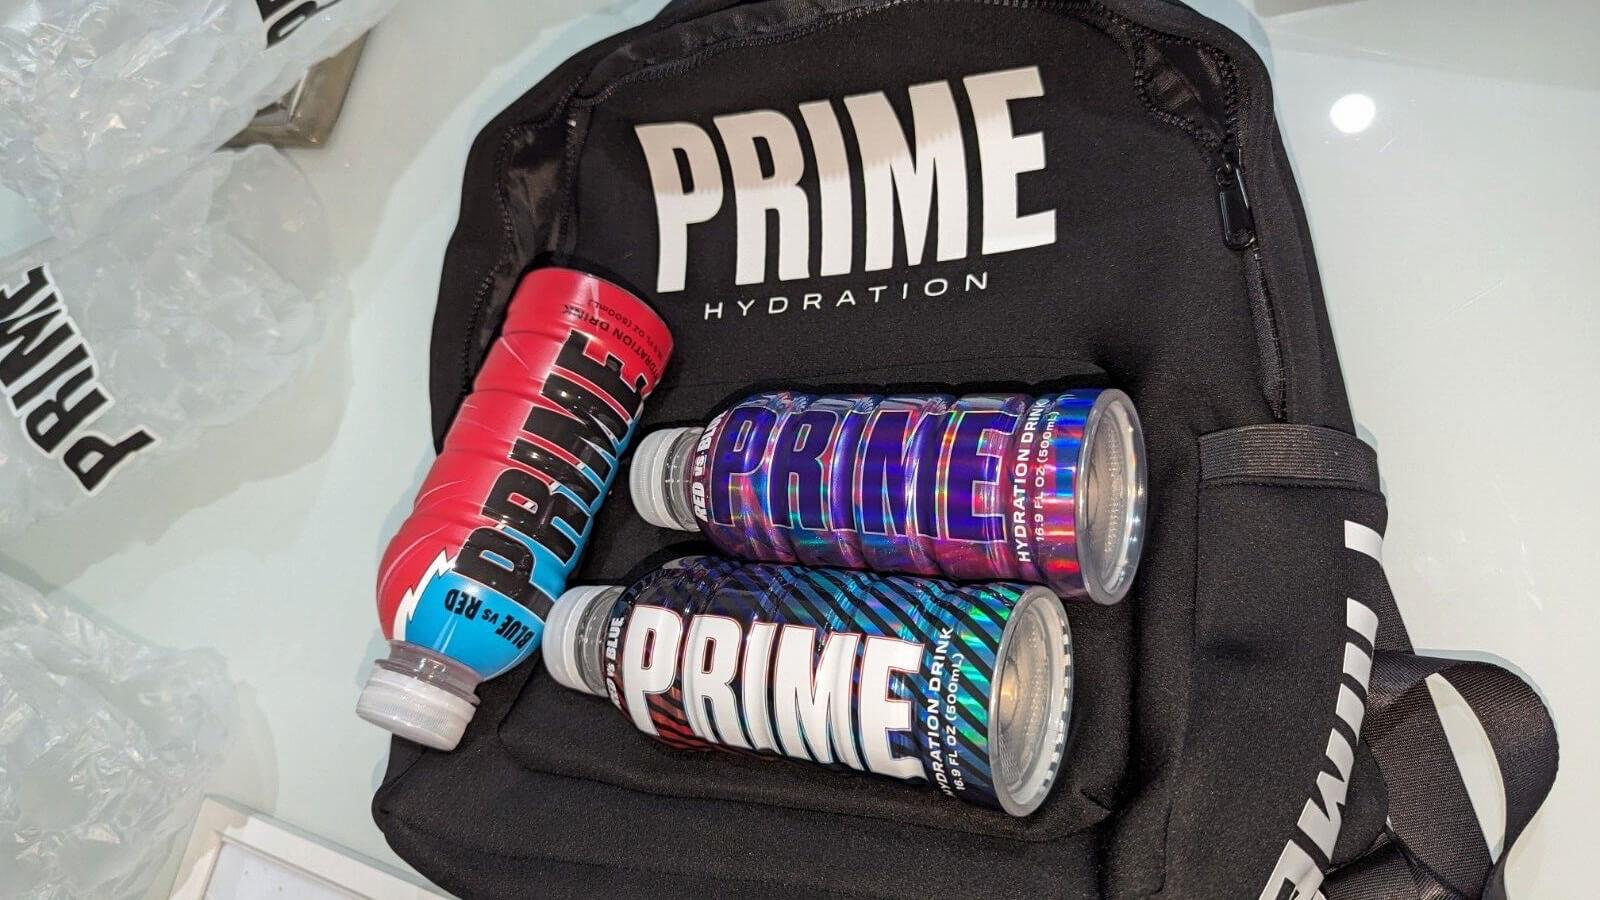 Fortnite Prime Hydration reward